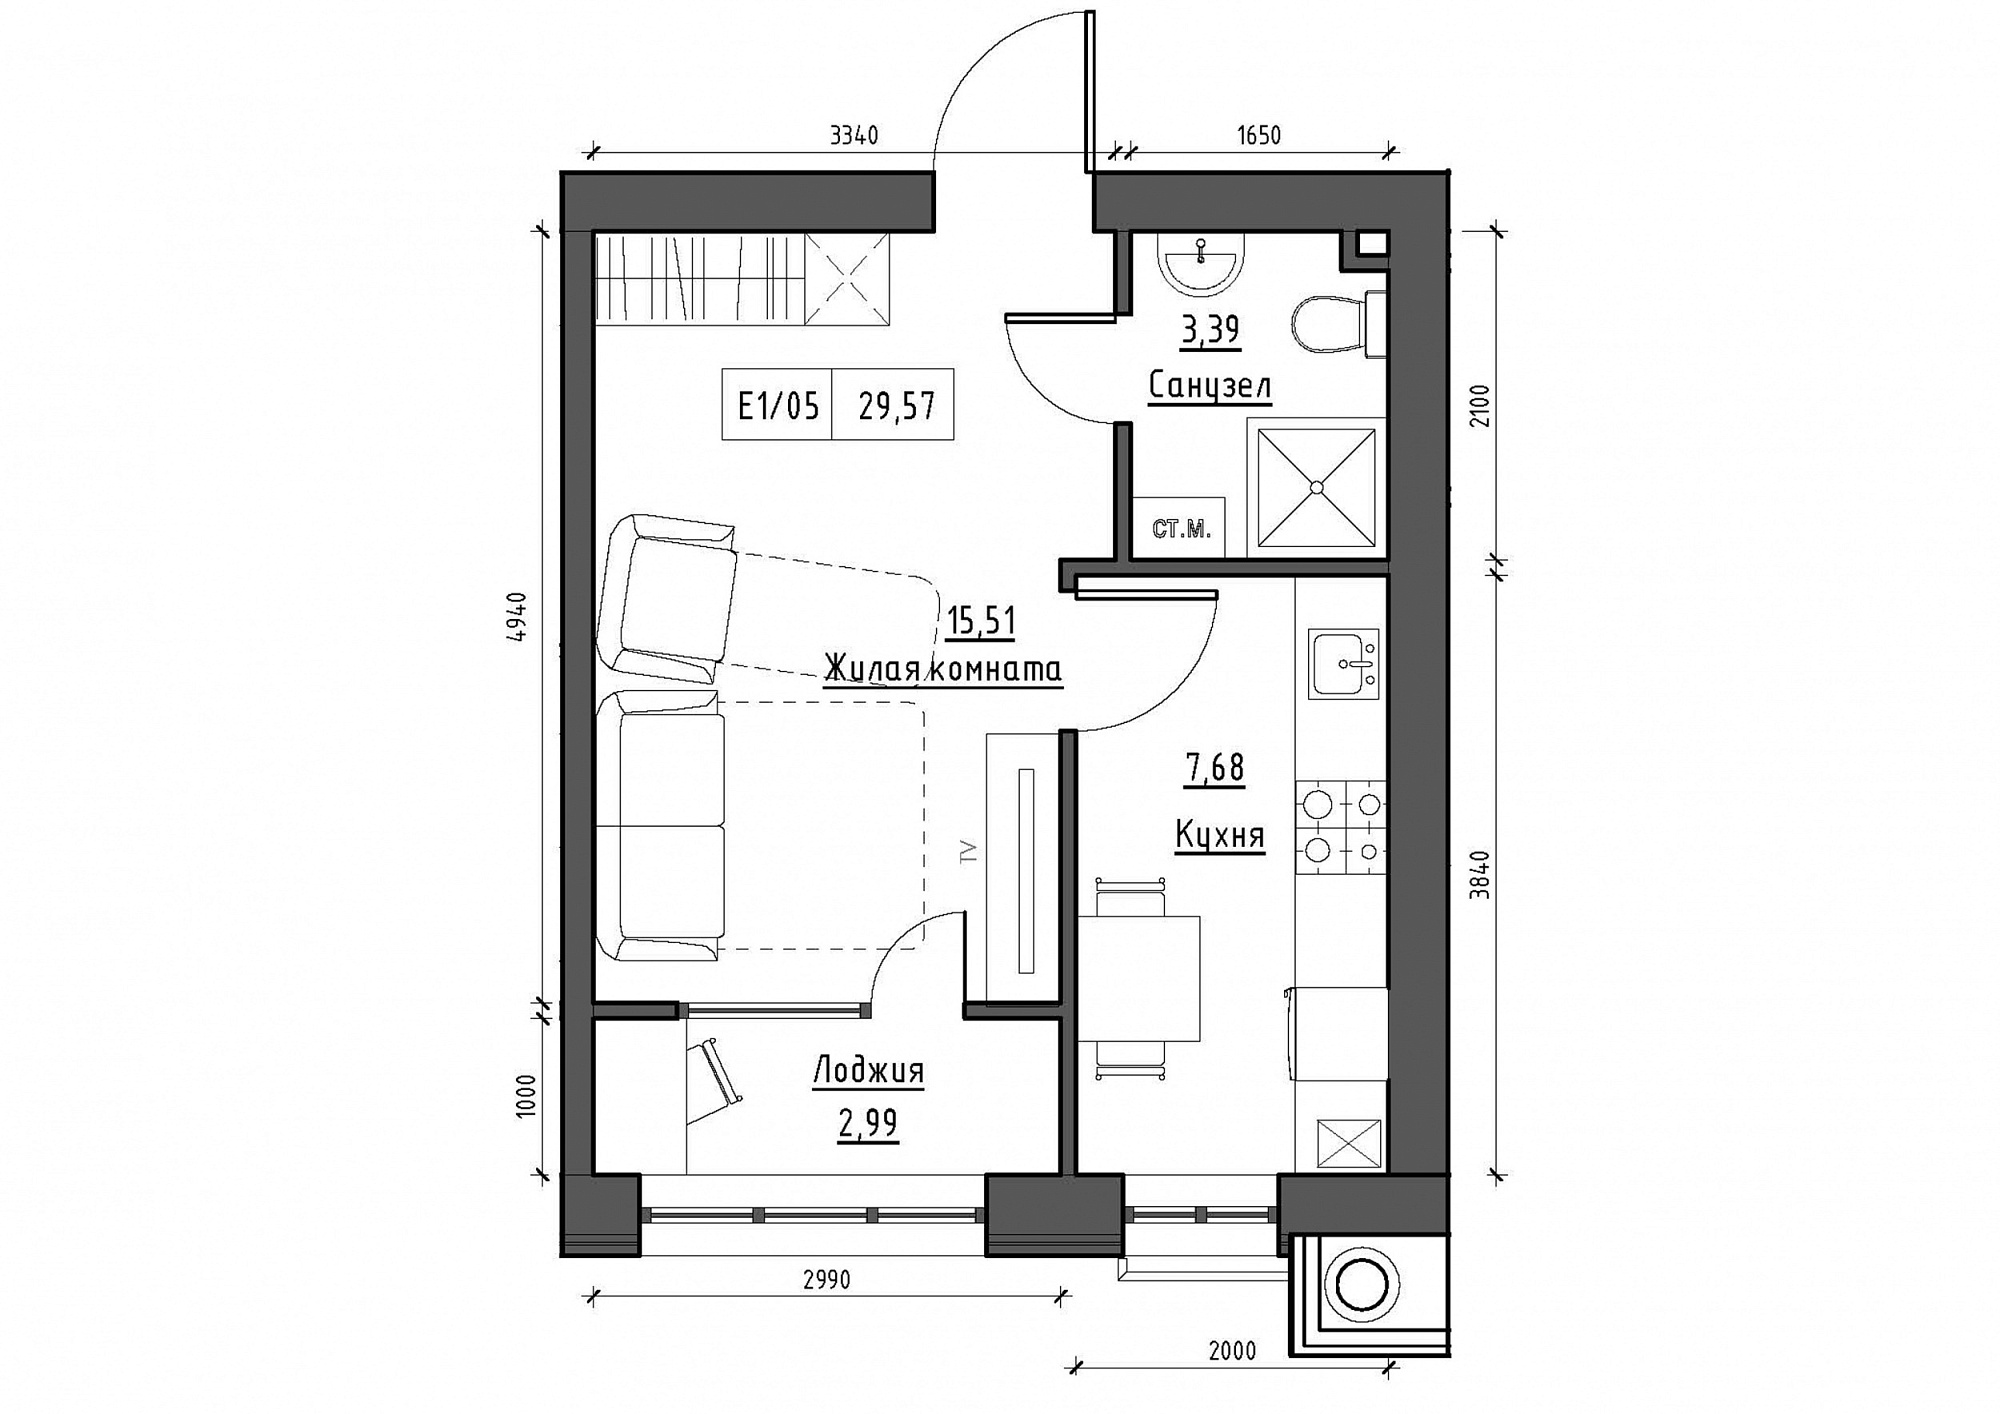 Planning 1-rm flats area 29.57m2, KS-012-02/0006.